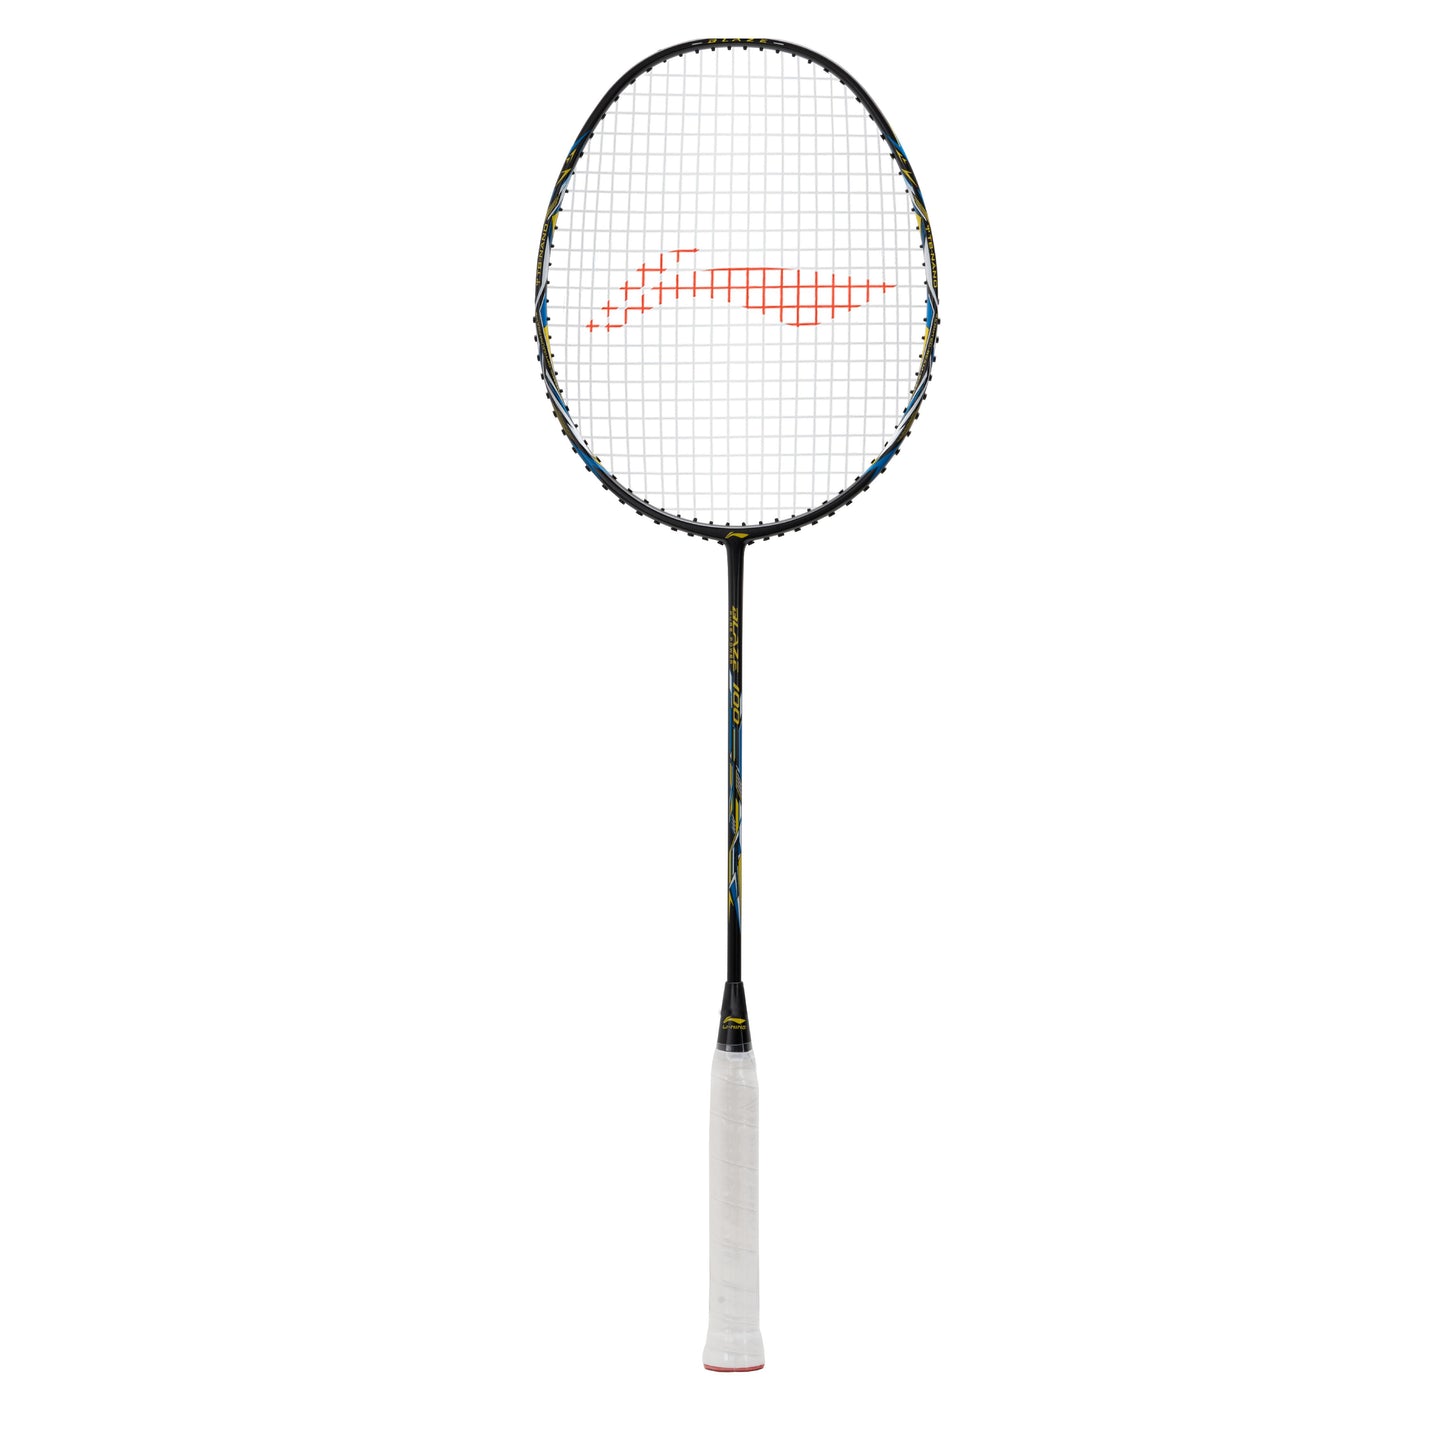 Li-Ning Blaze 100 Badminton Racket (Charcoal/Lime/Blue)